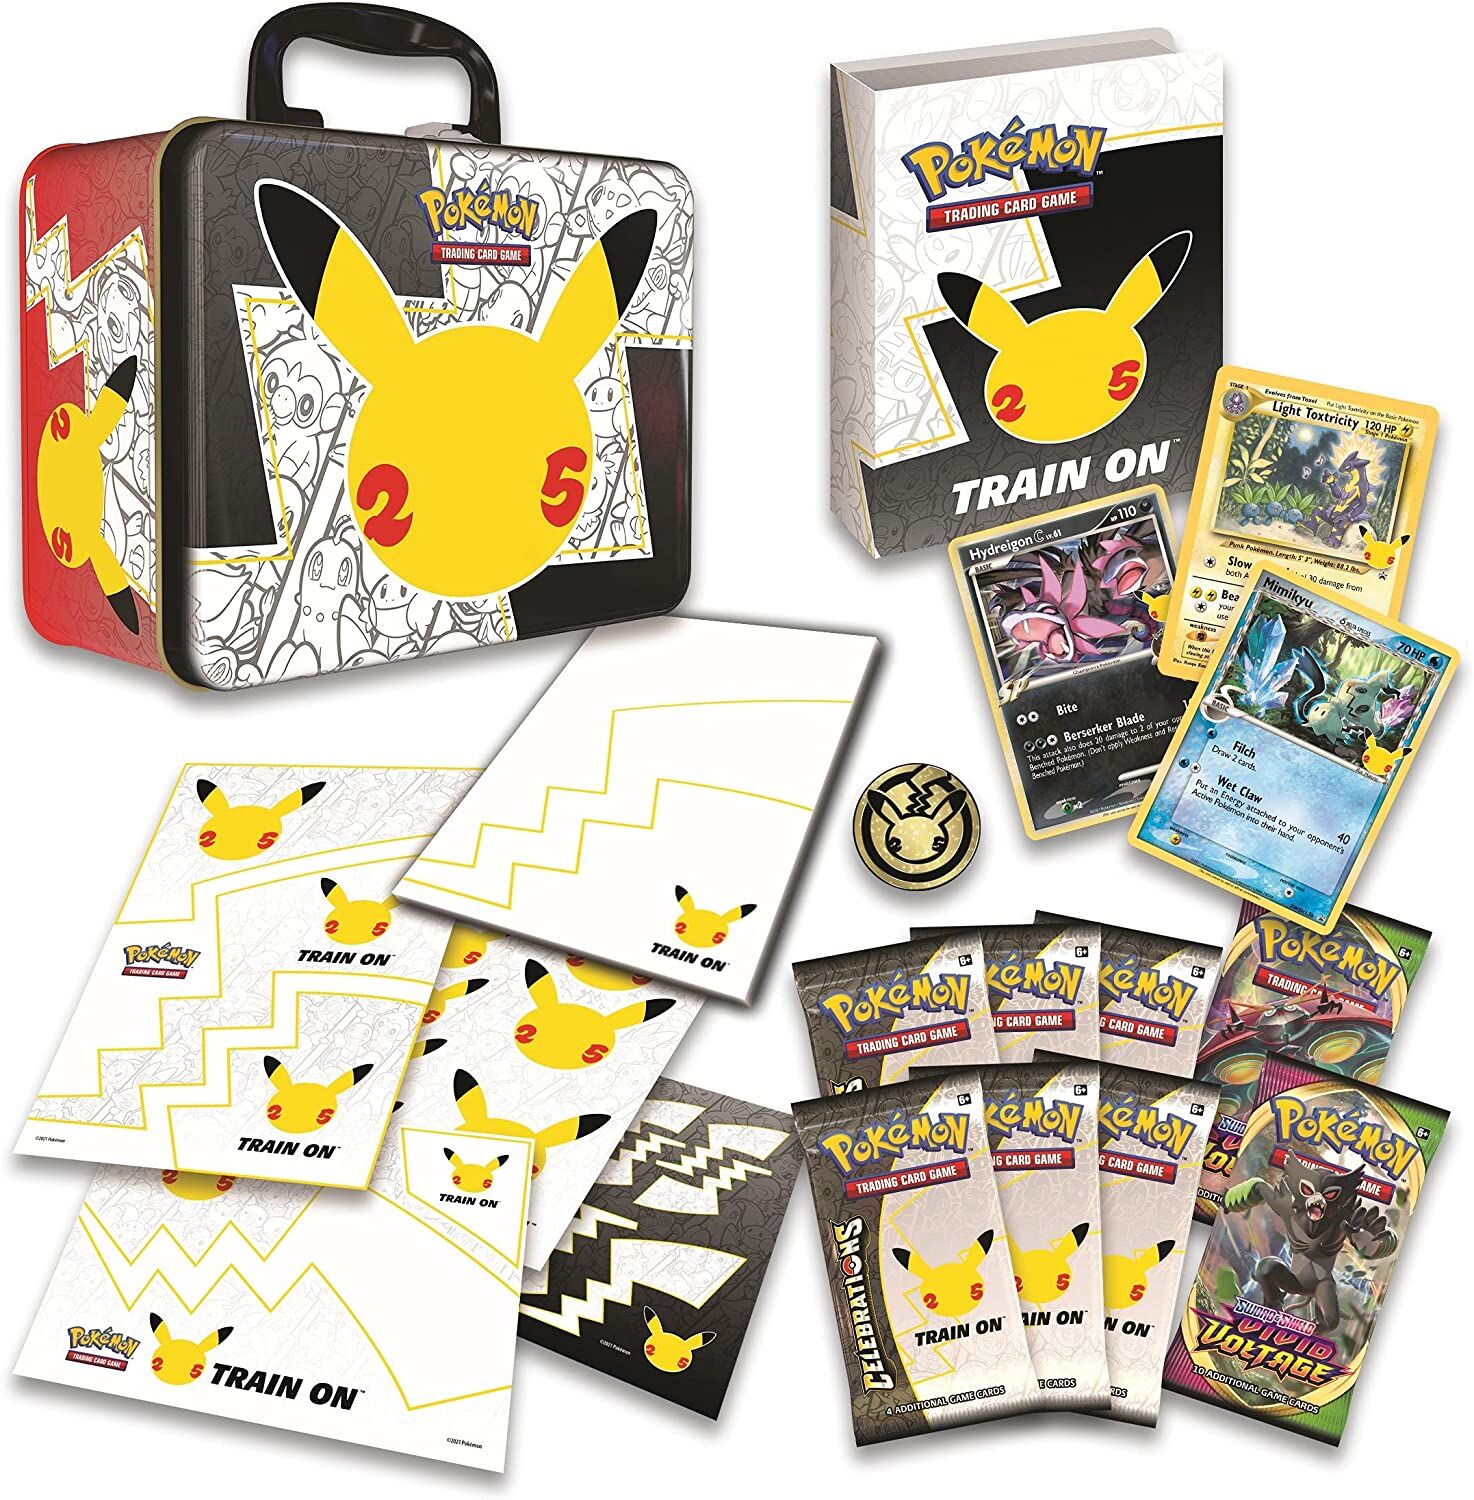 Pokémon 25th Anniversary Celebrations Prime Collection Box - EN